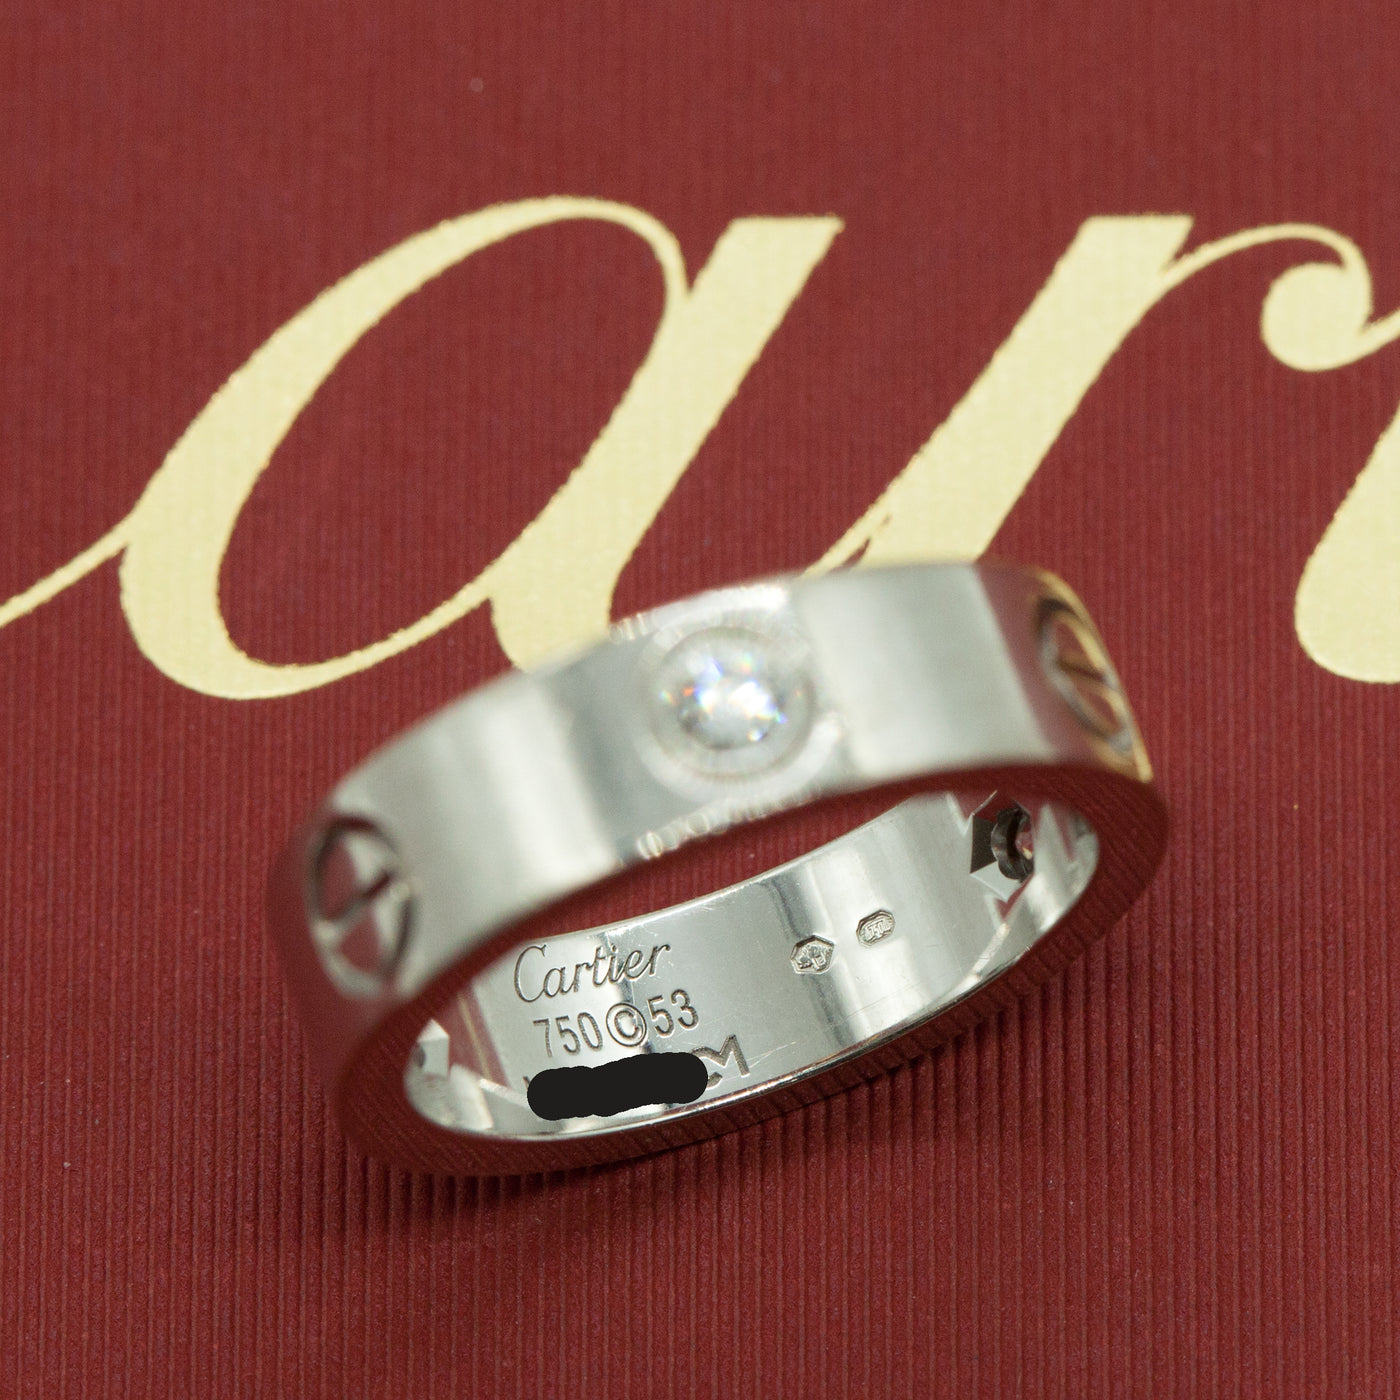 Love Ring Sterling Silver - Lisa Welch Designs